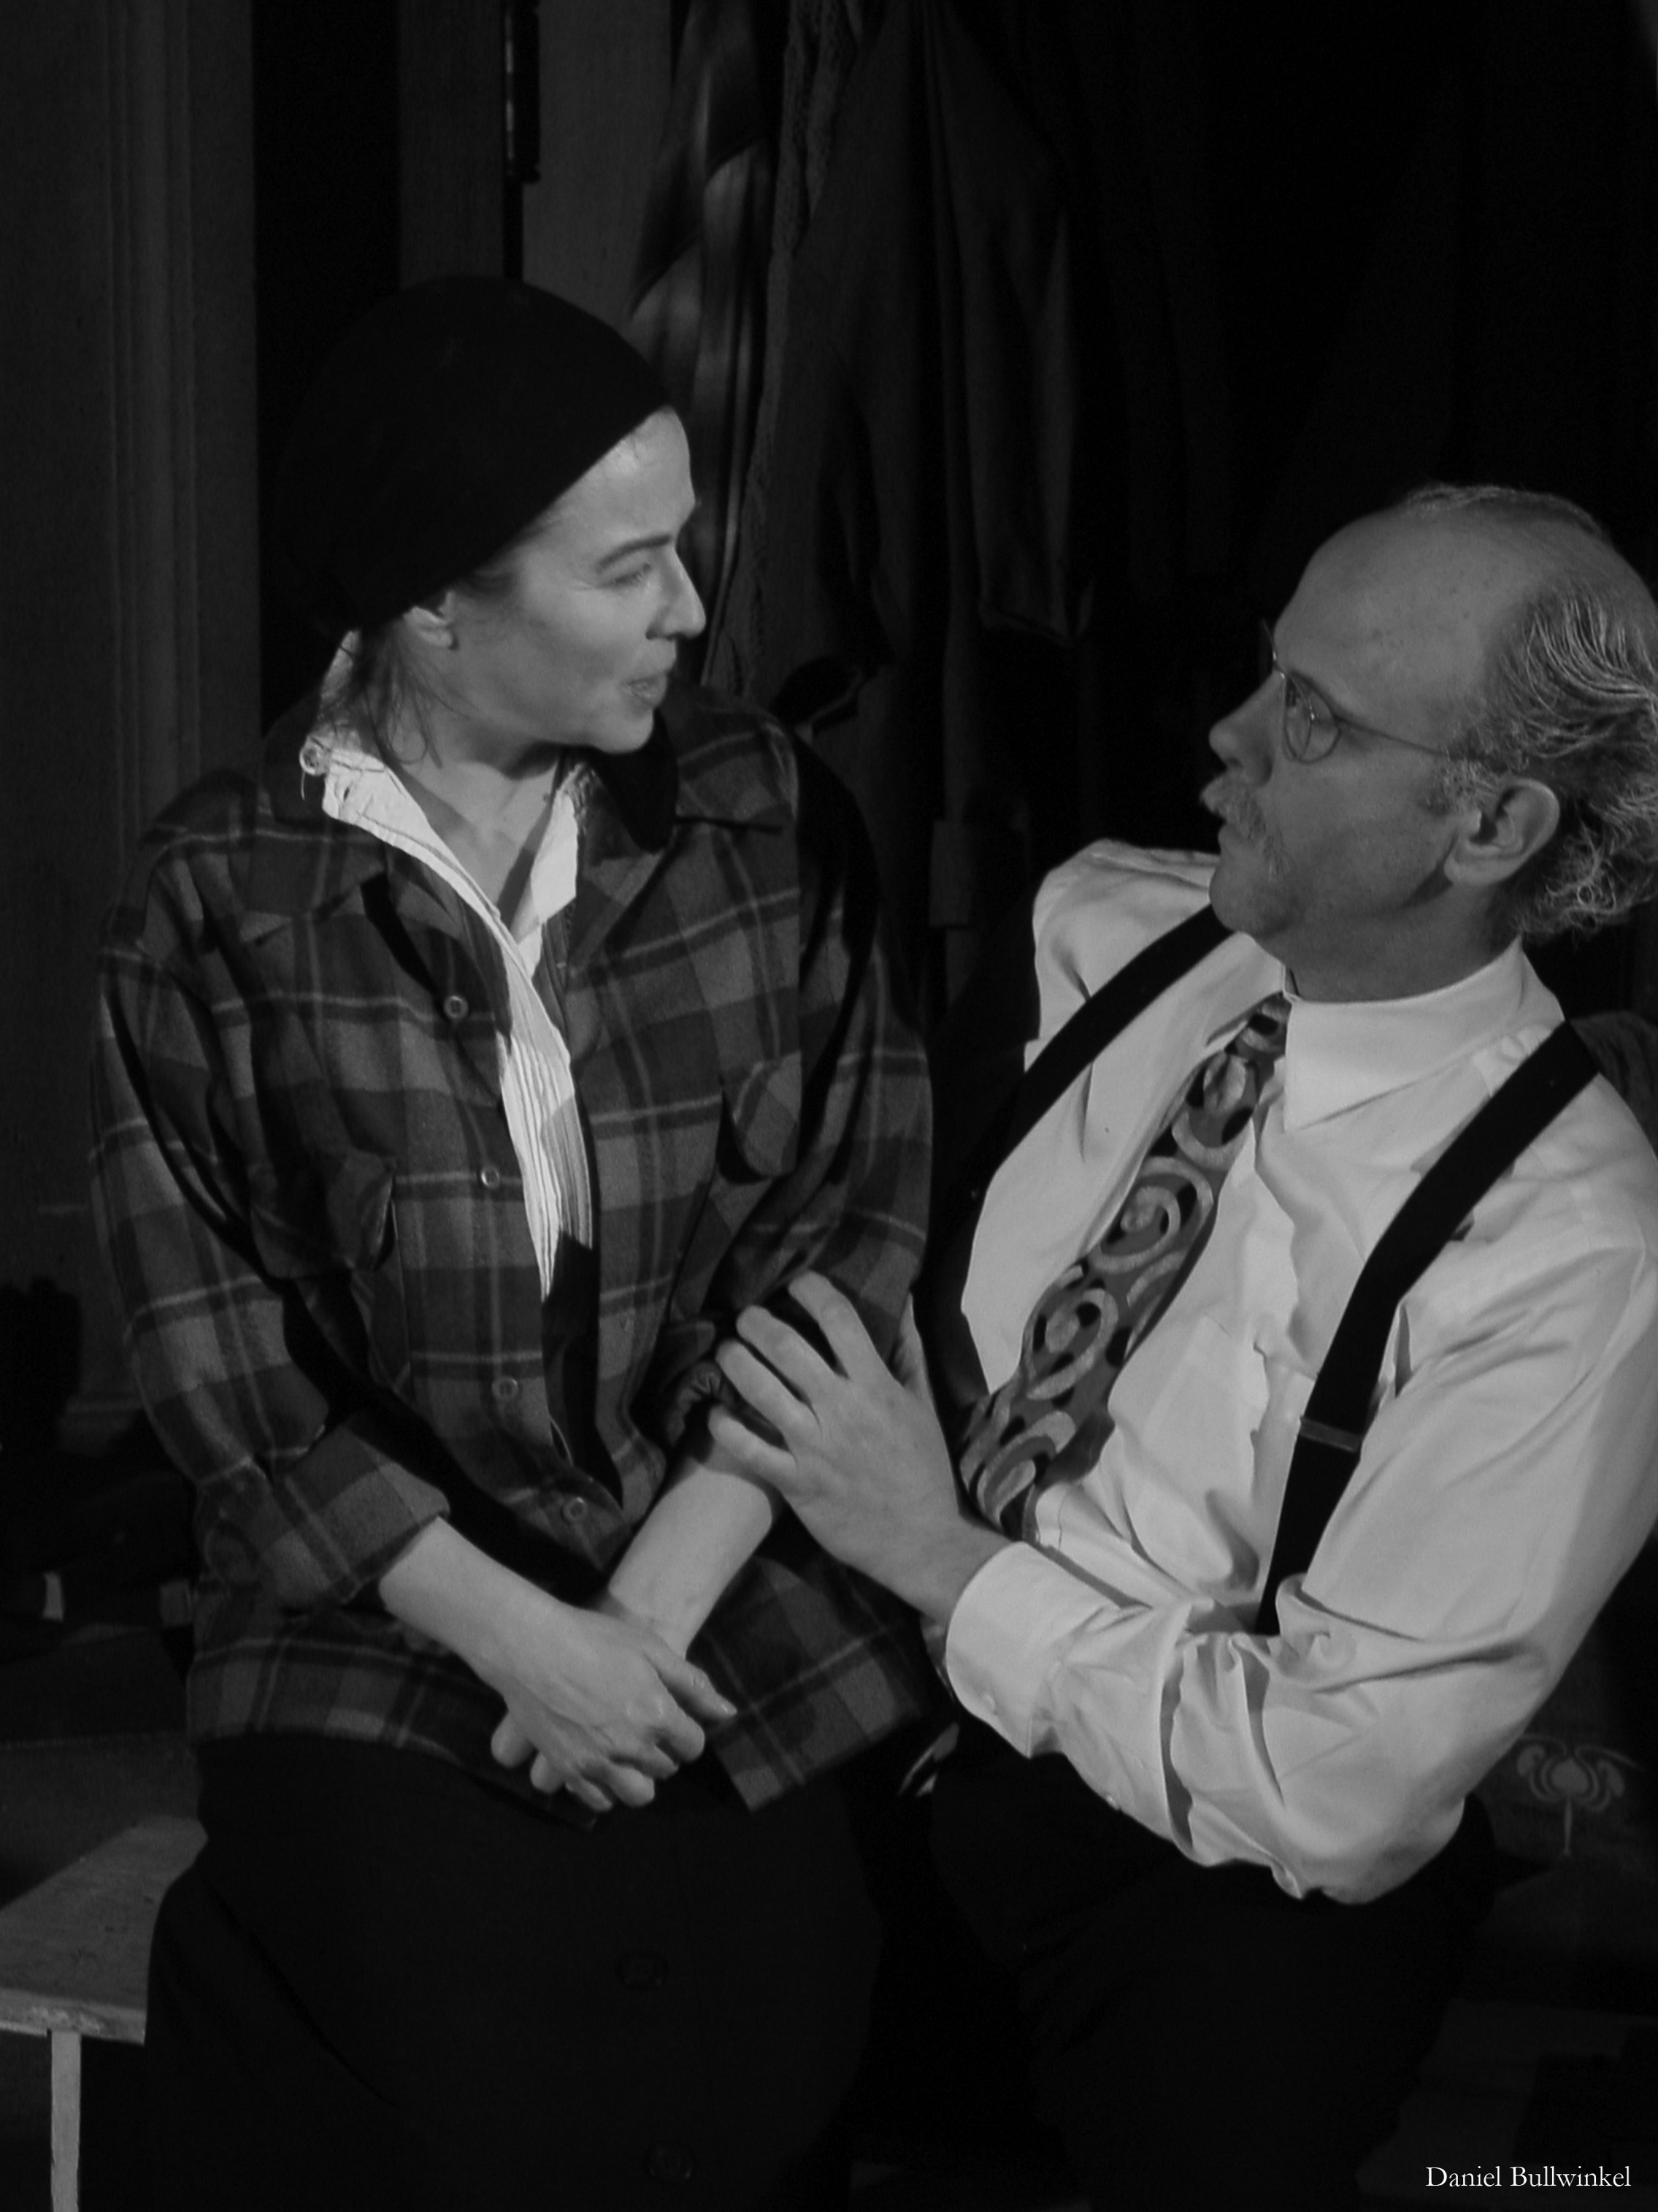 Pamela Gaye Walker as Georgia O'Keeffe and Jim Ortlieb as Alfred Stieglitz